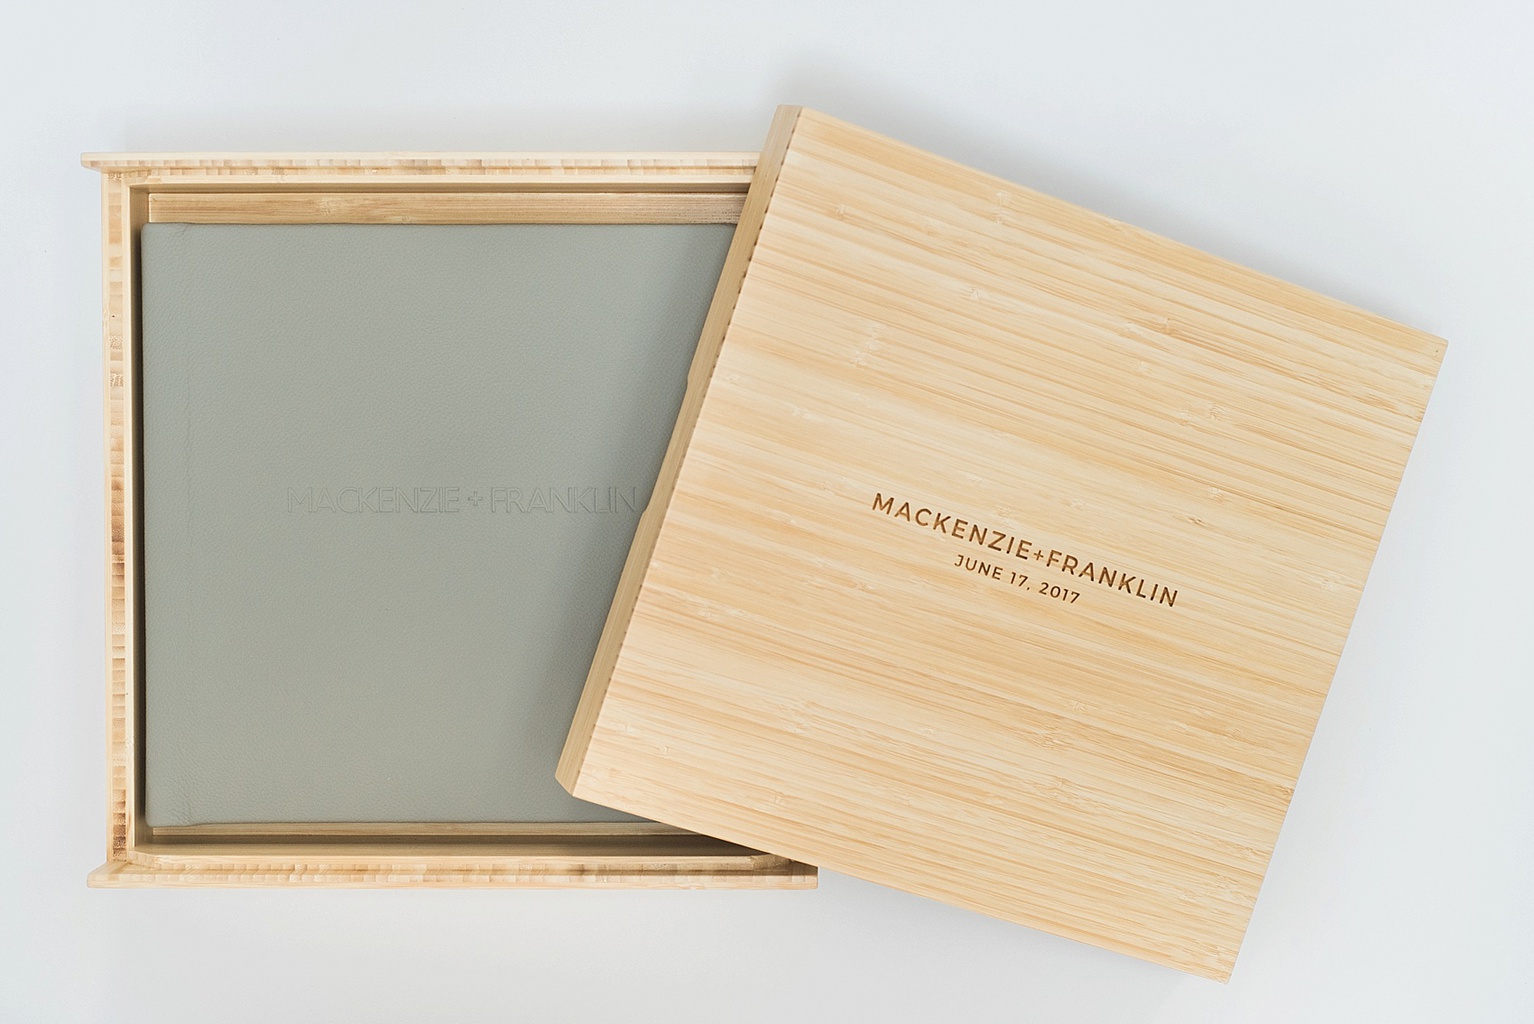 bamboo album box with leather album